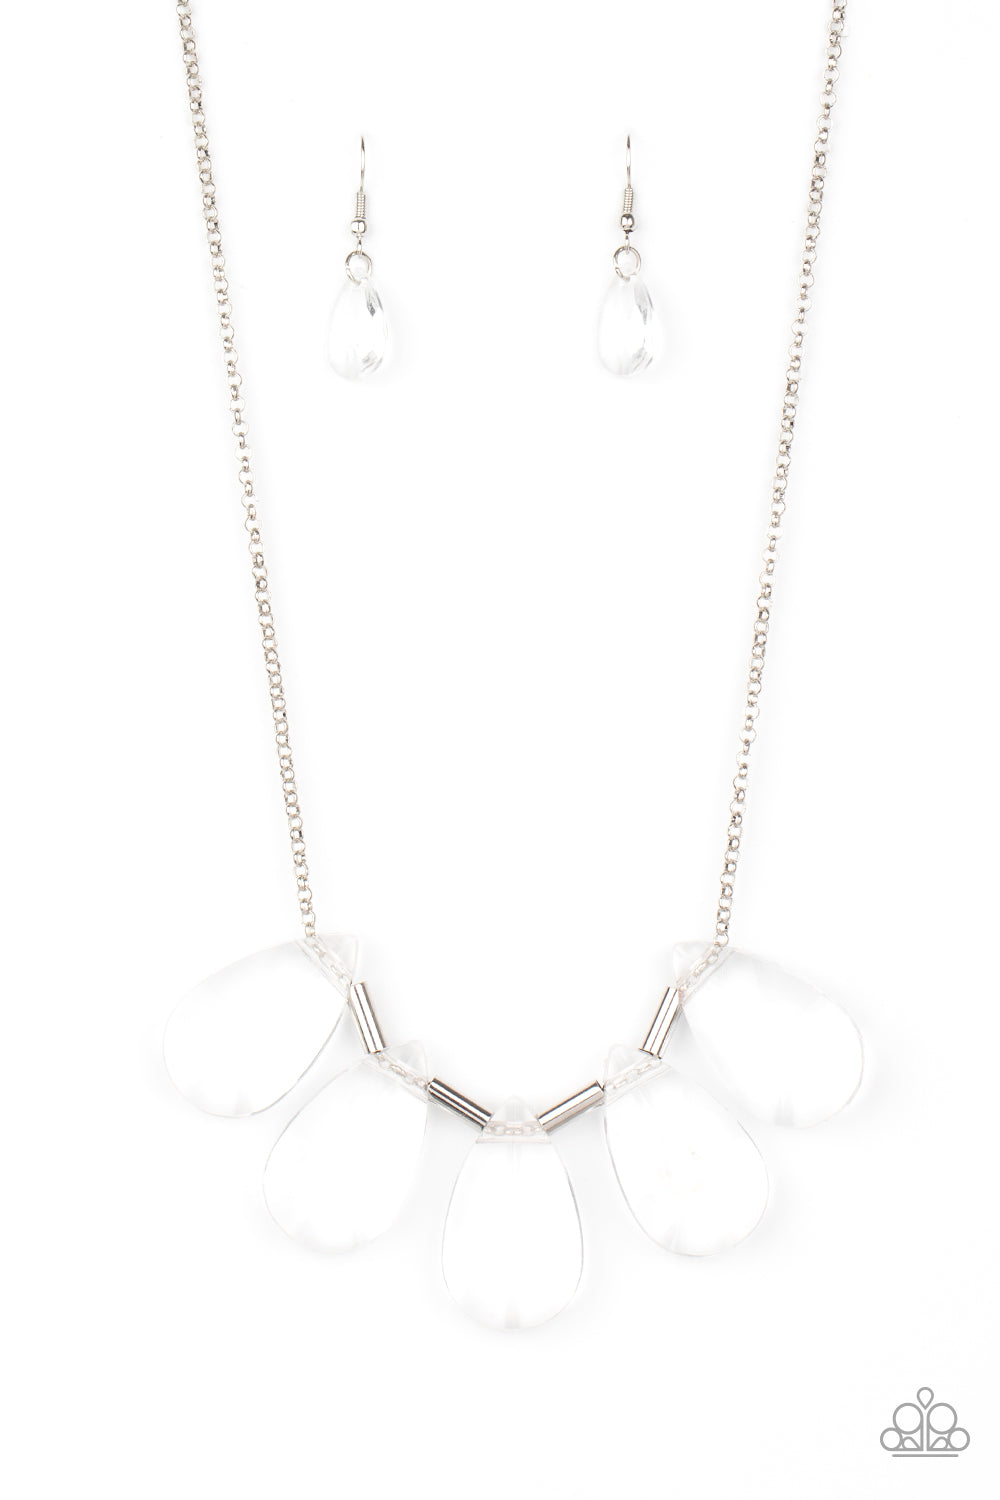 HEIR It Out - White Necklace Set - Princess Glam Shop